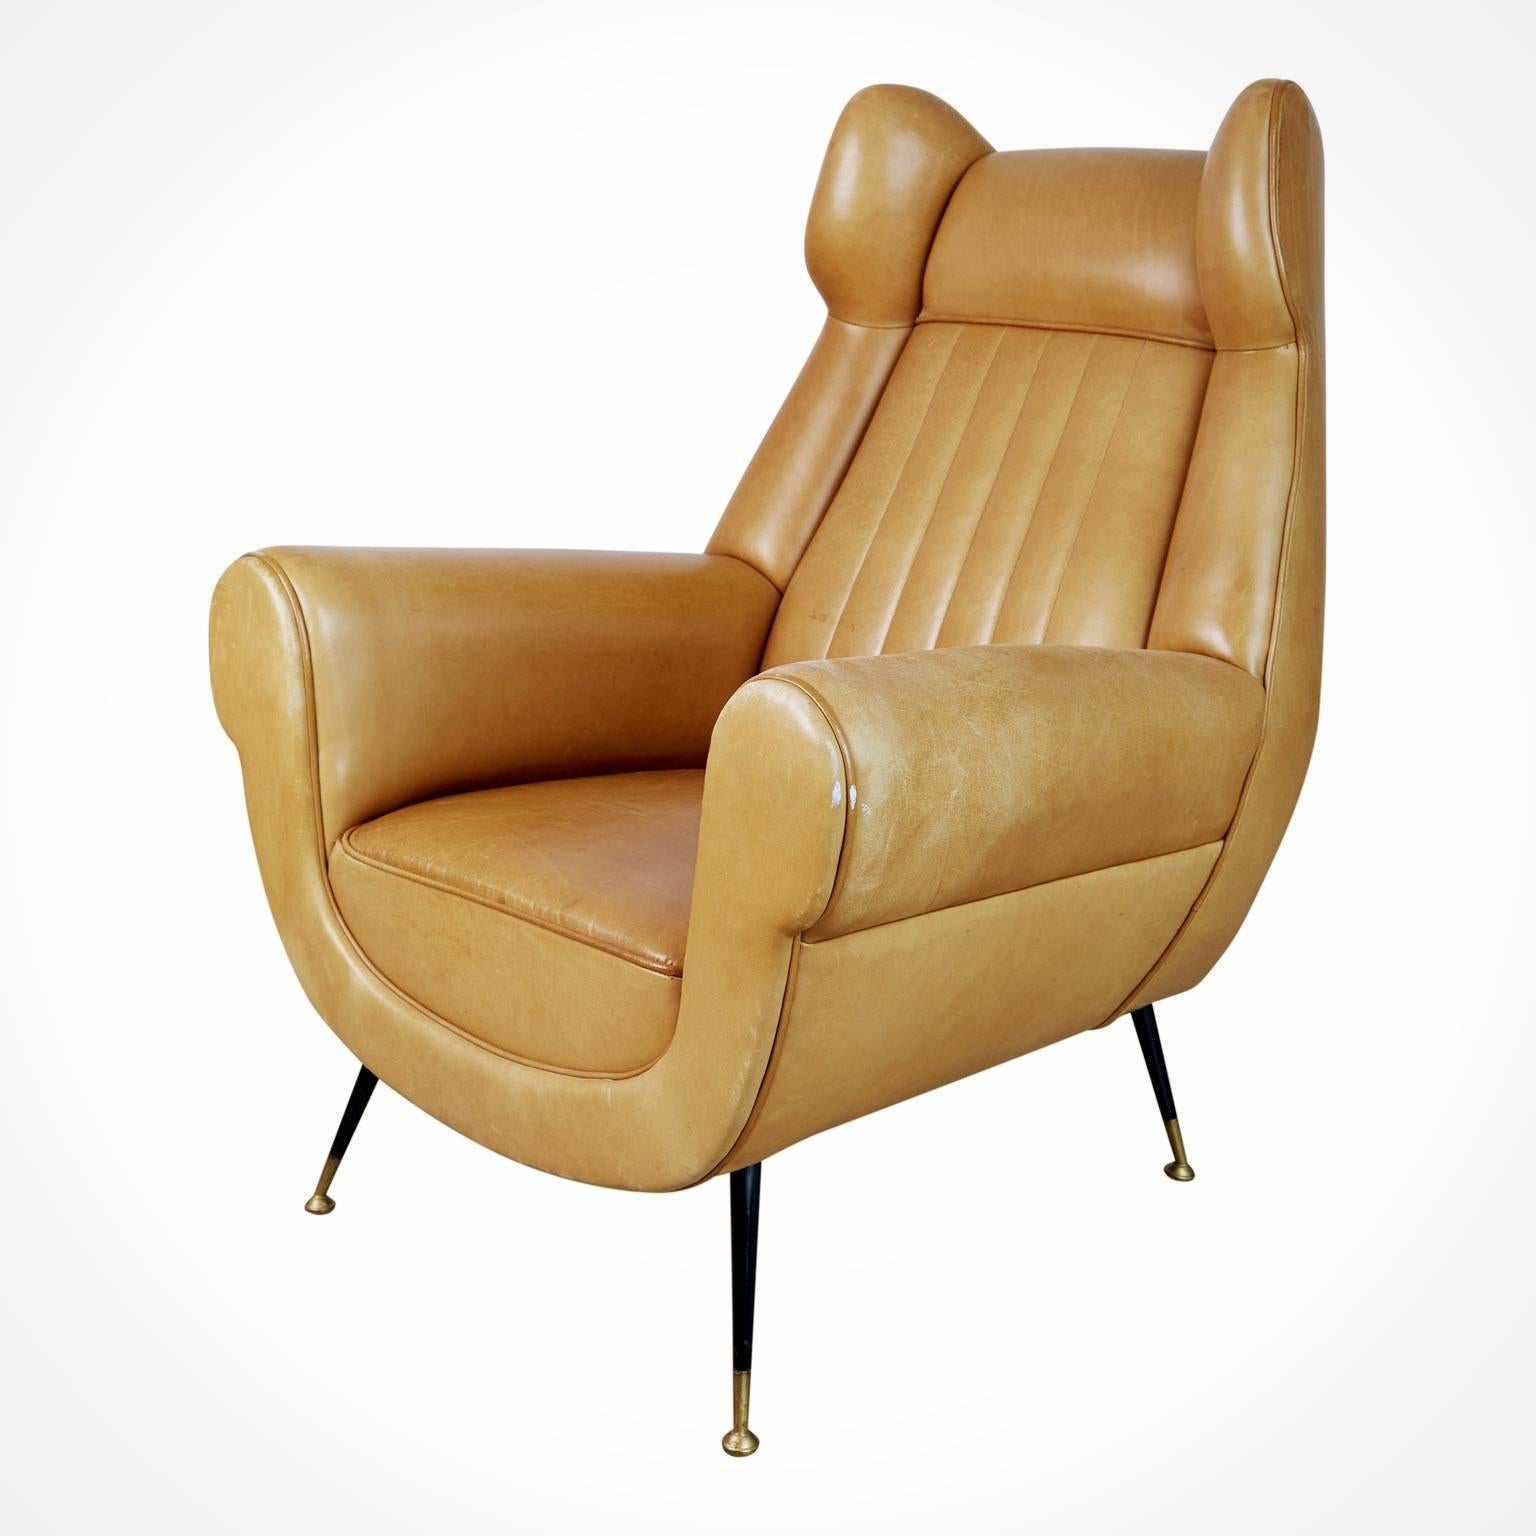 Gigi Radice for Minotti Leather Wingback Chairs, Pair, Italy circa 1960 (Moderne der Mitte des Jahrhunderts)